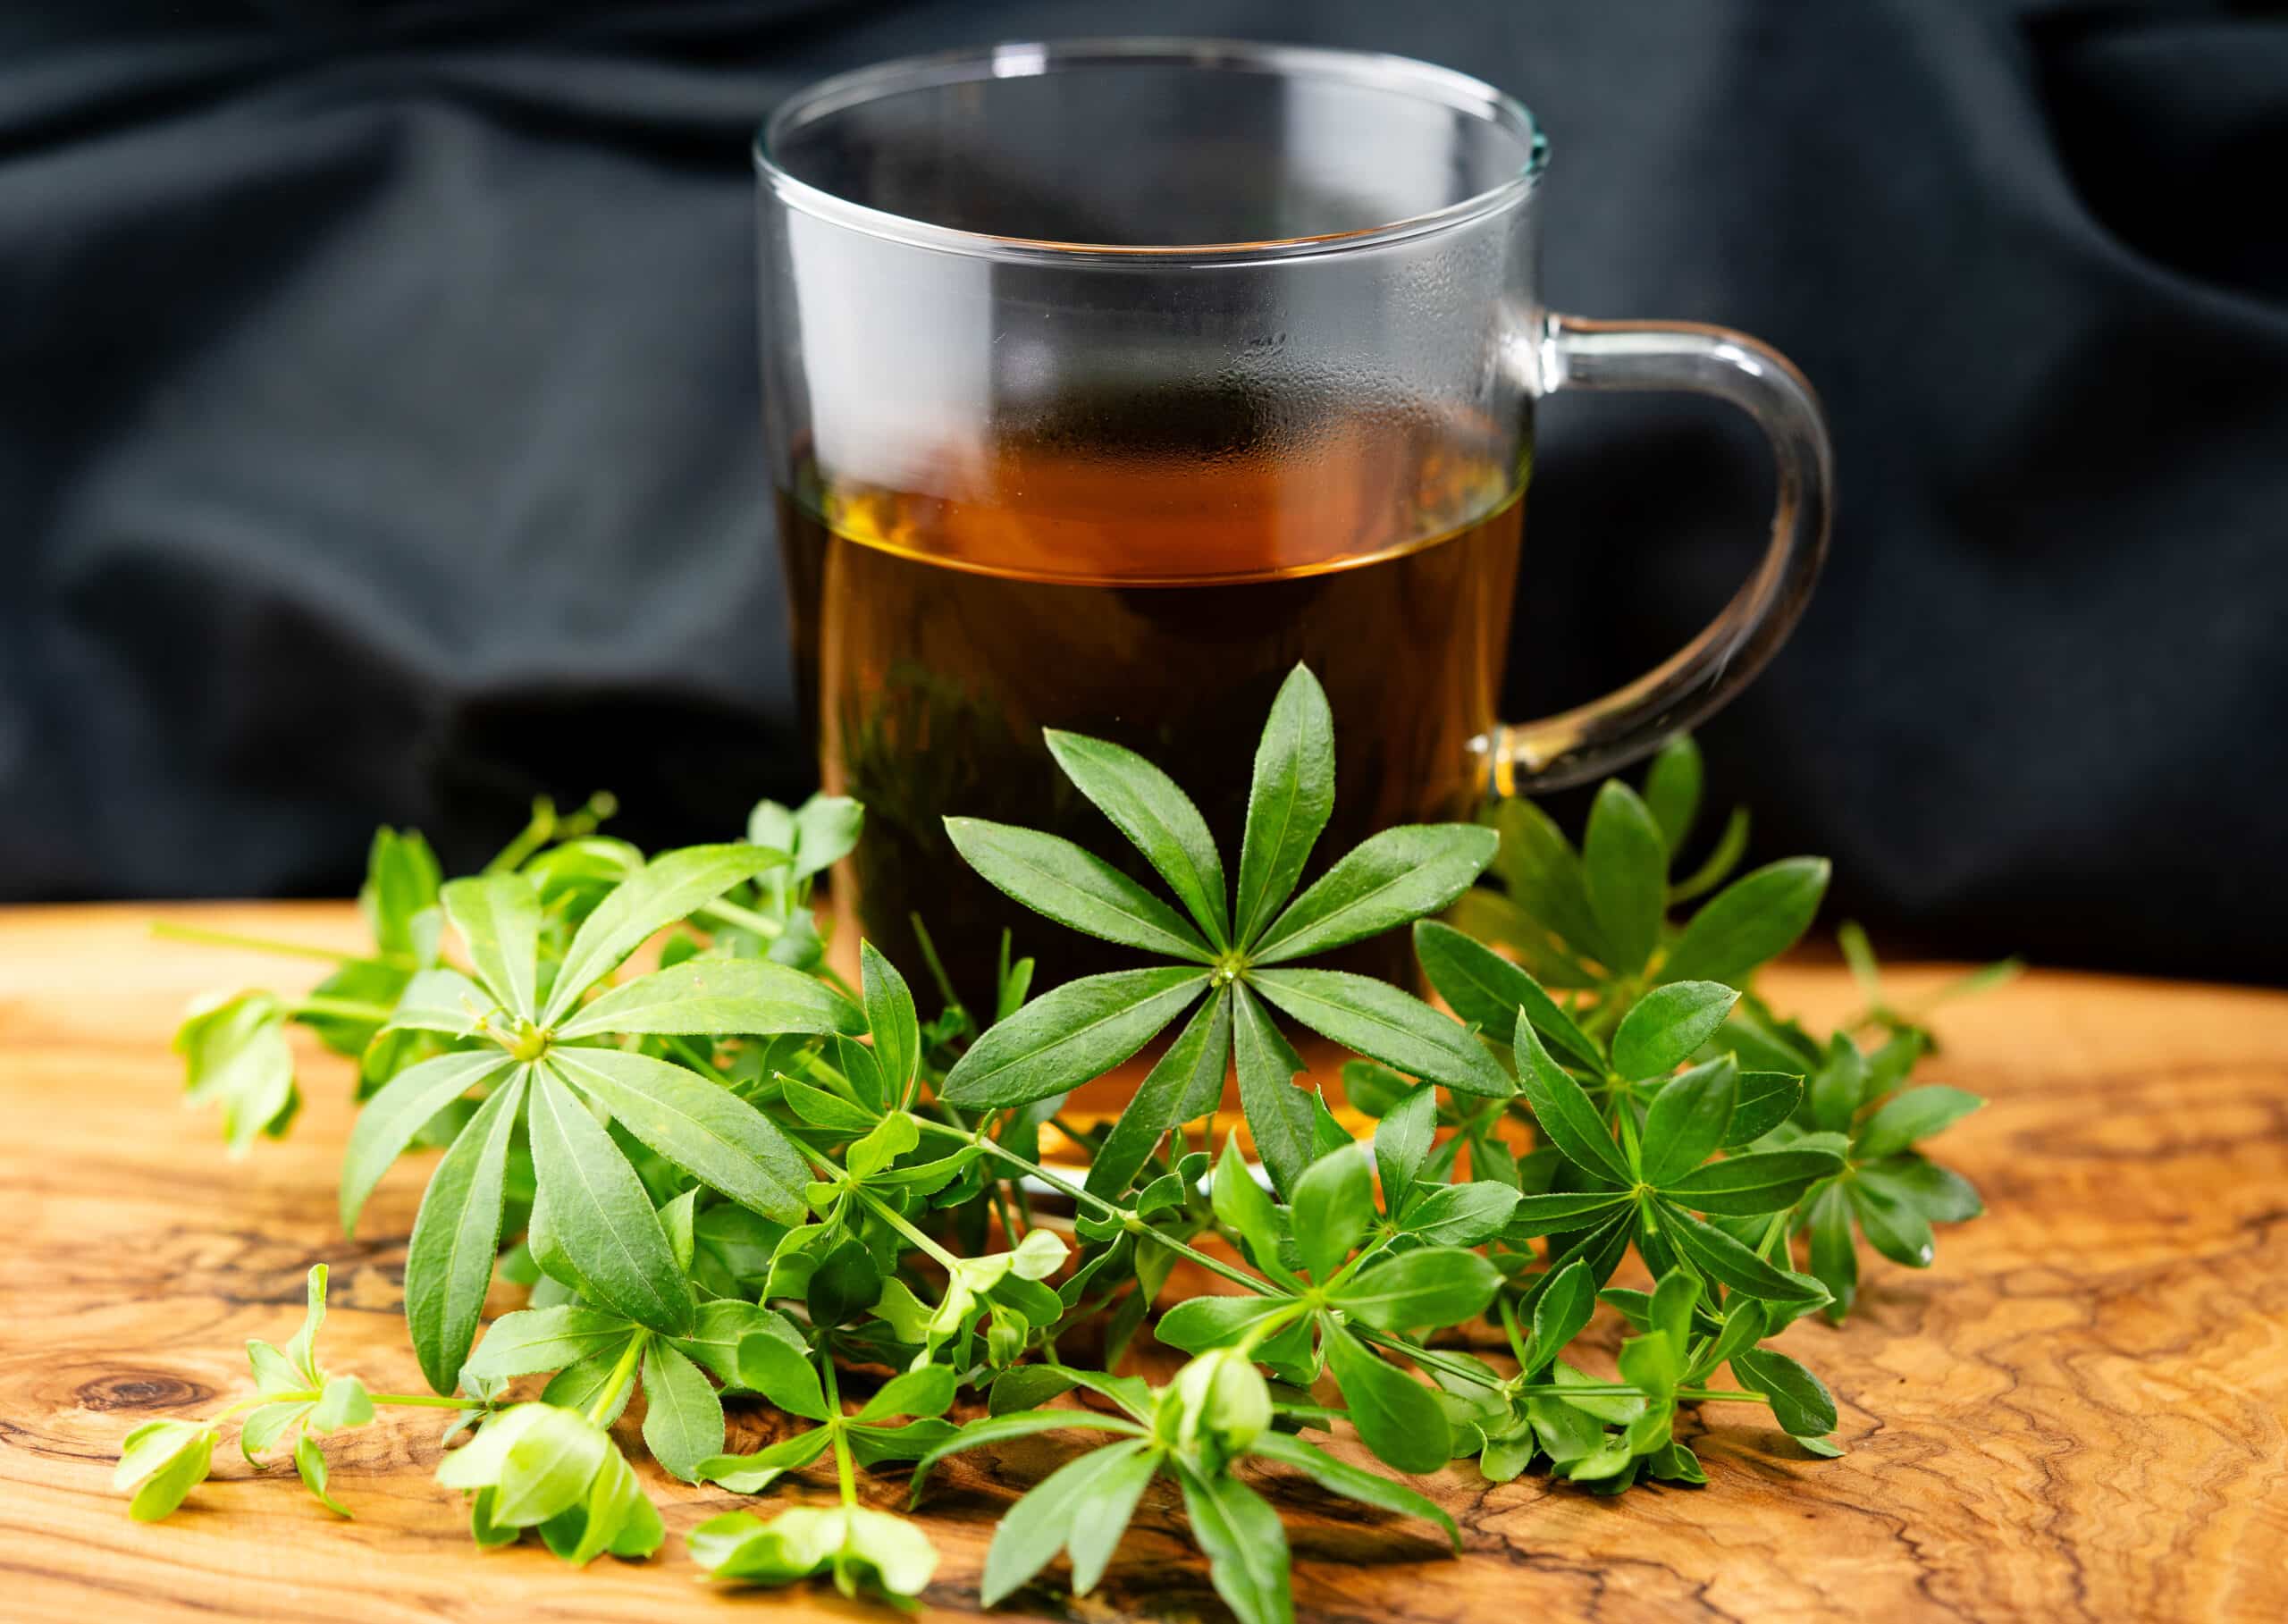 growmyownhealthfood.com : Are medicinal herbs considered true medicine?